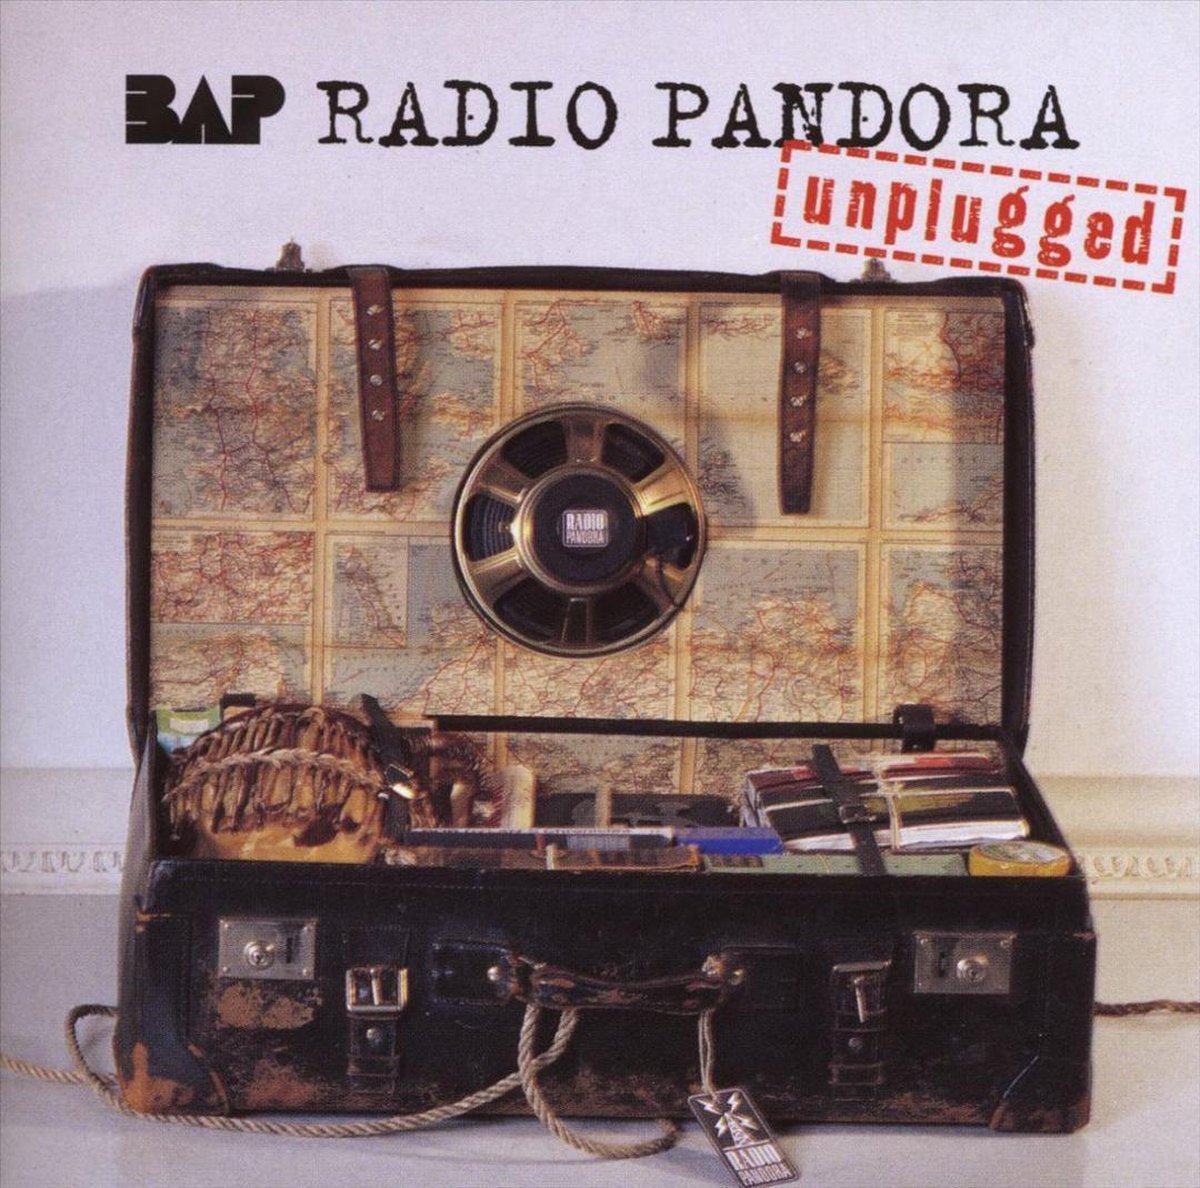 Afbeelding van product Radio Pandora (Unplugged)  - BAP